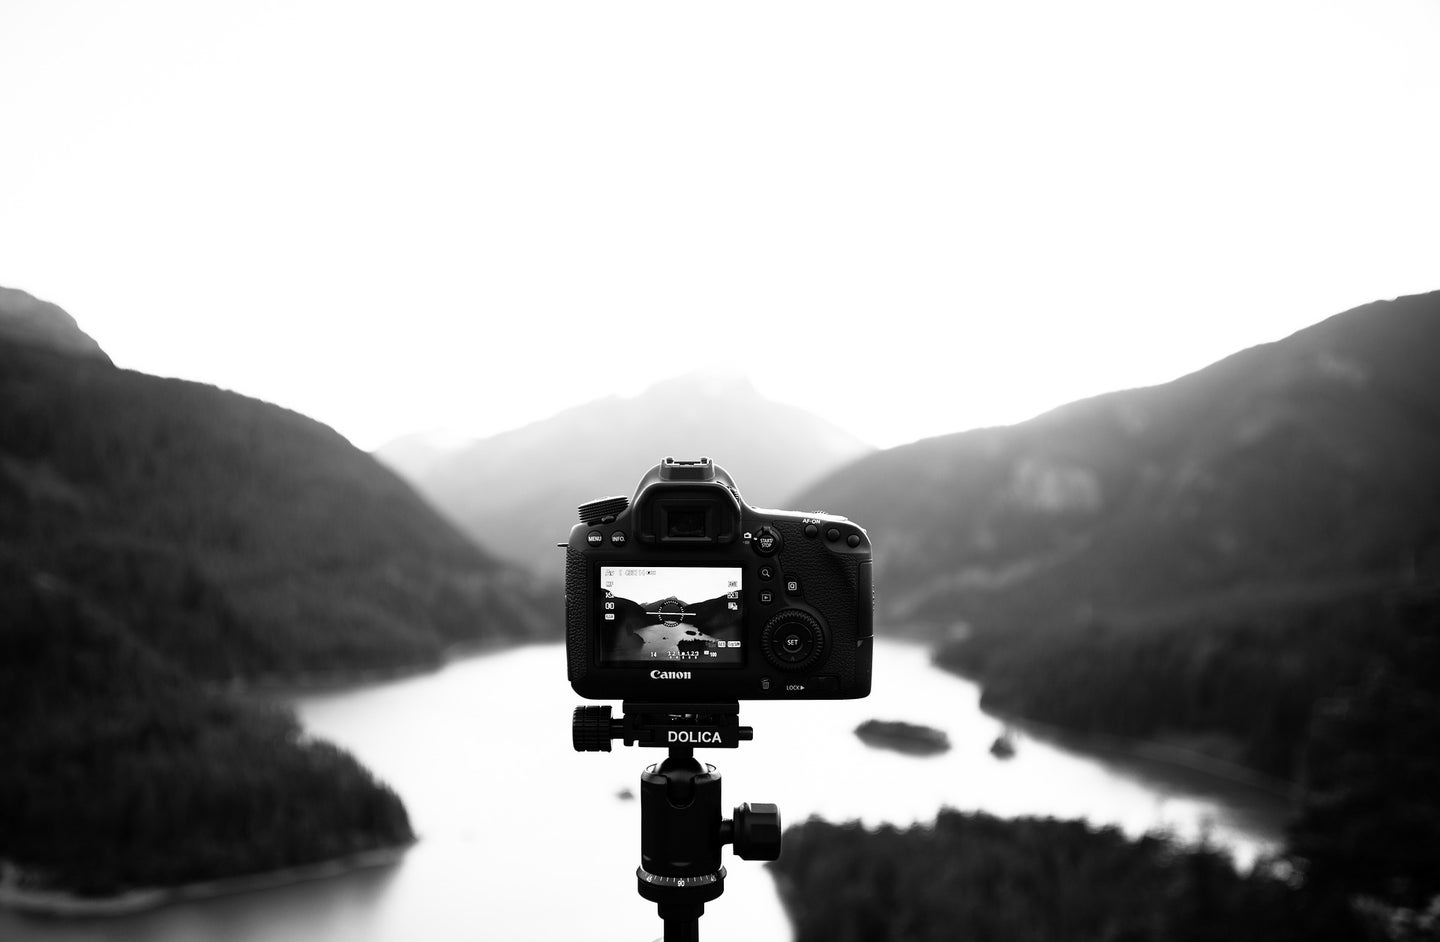 Camera capturing a landscape